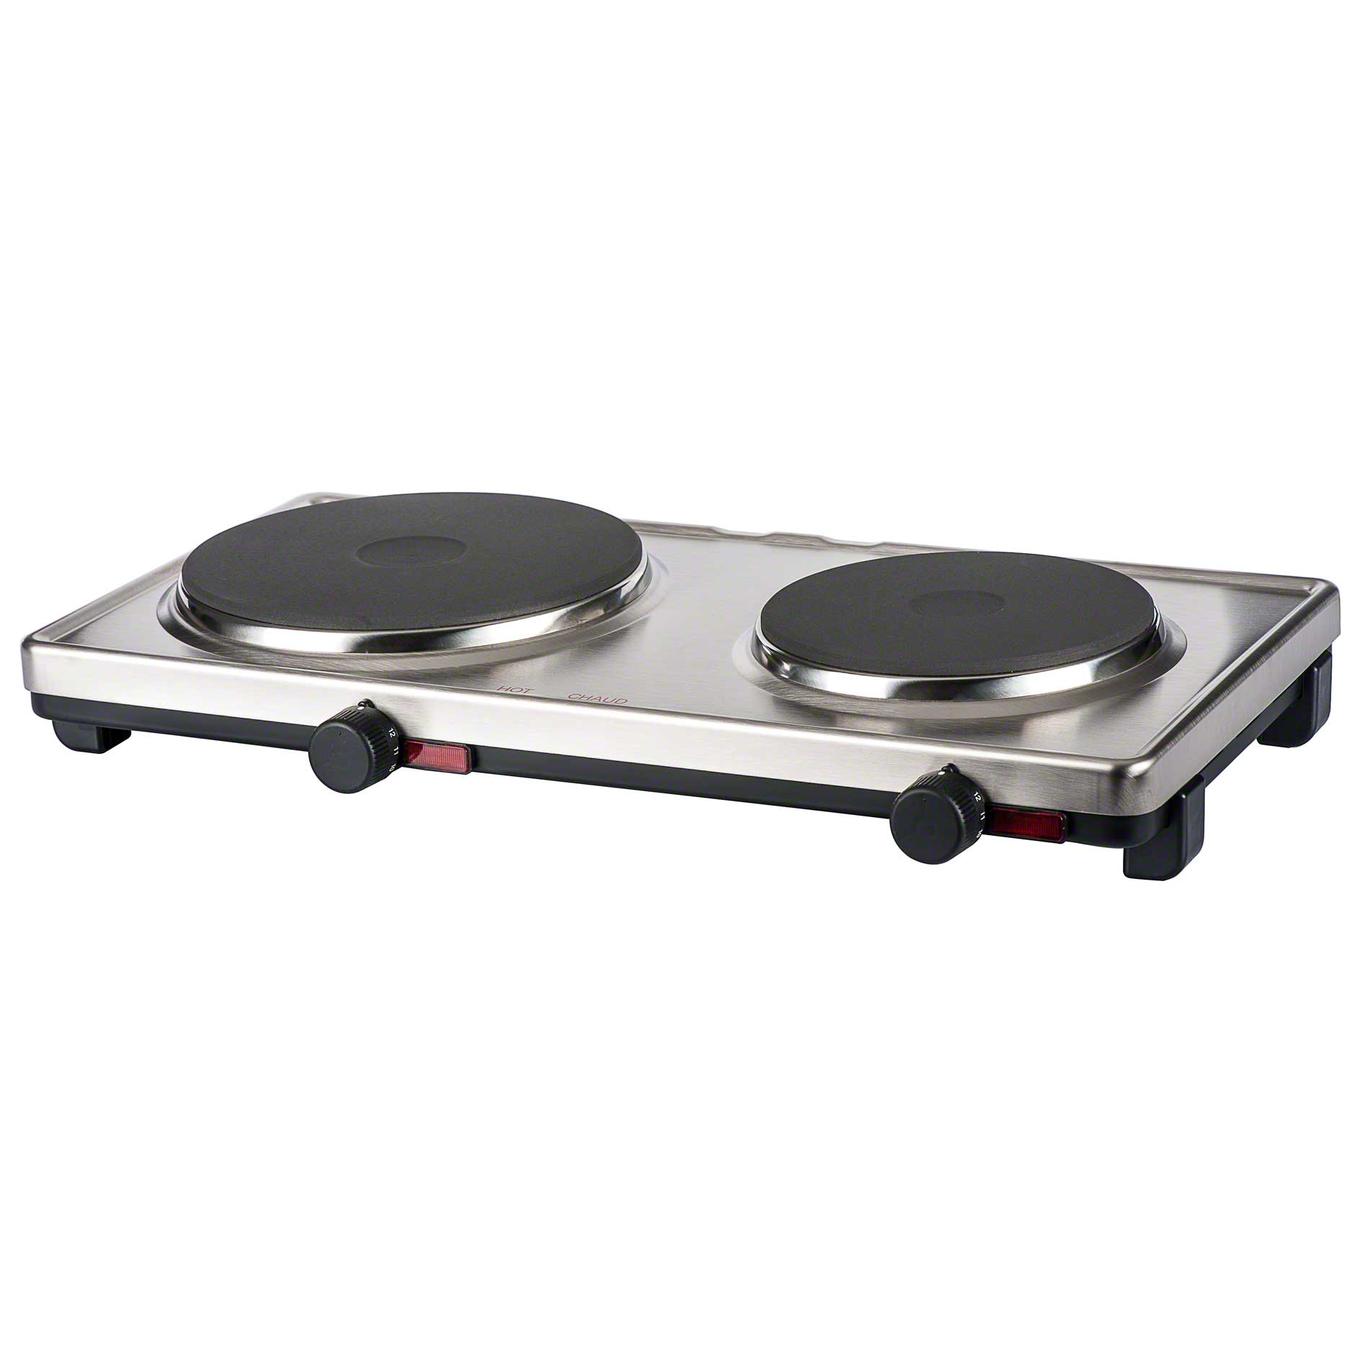 Cadco KR-S2 Portable Hot Plate Countertop